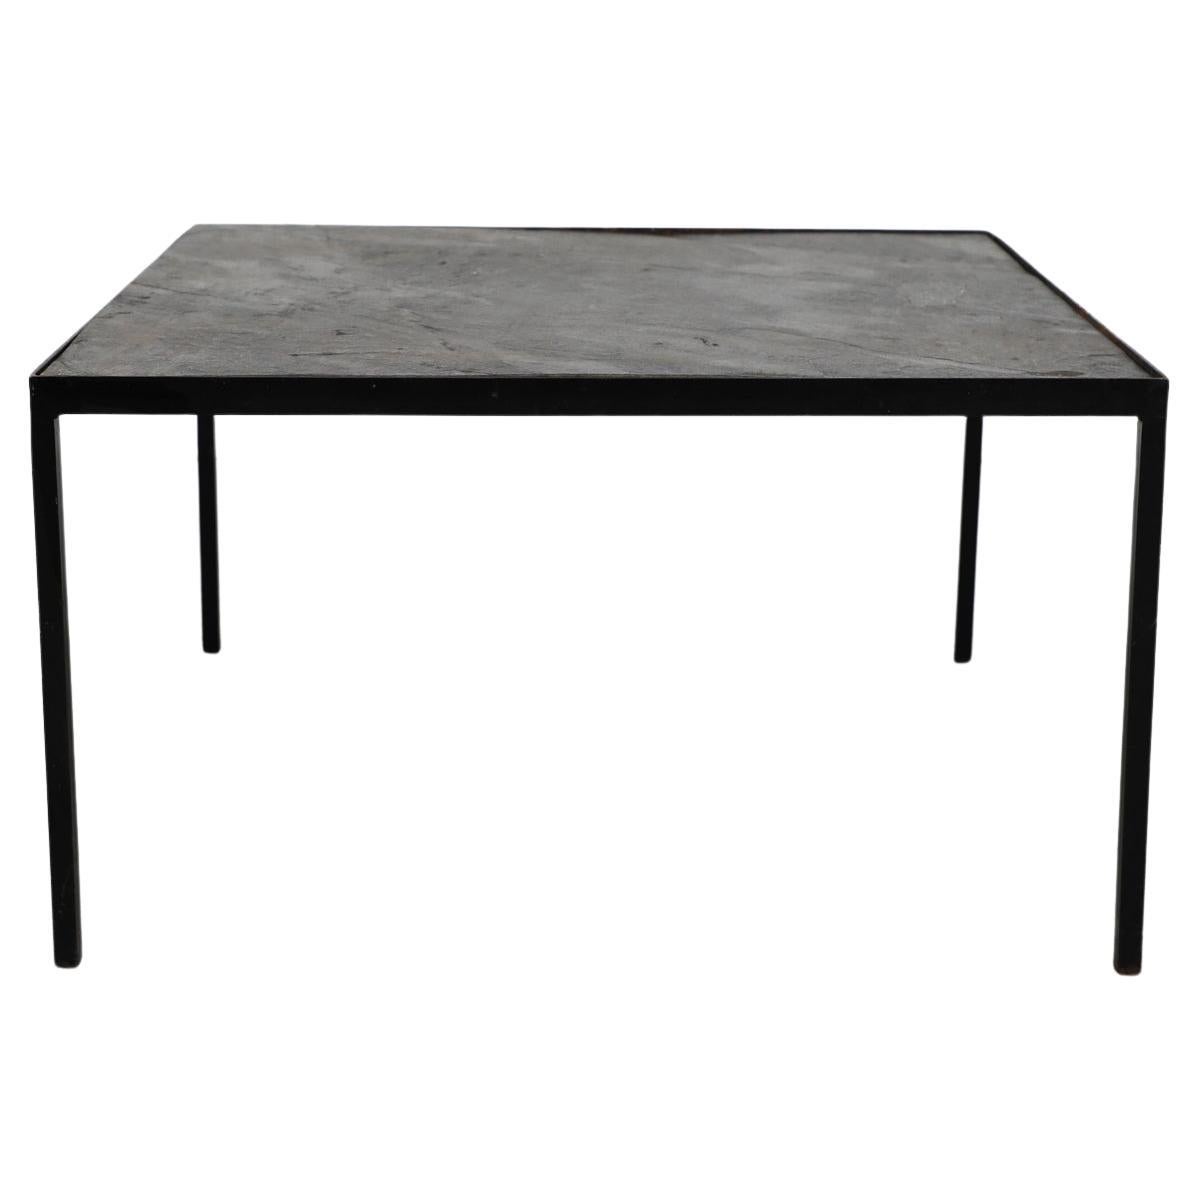 Mesa baja Artimeta con tapa de piedra y base esmaltada en negro